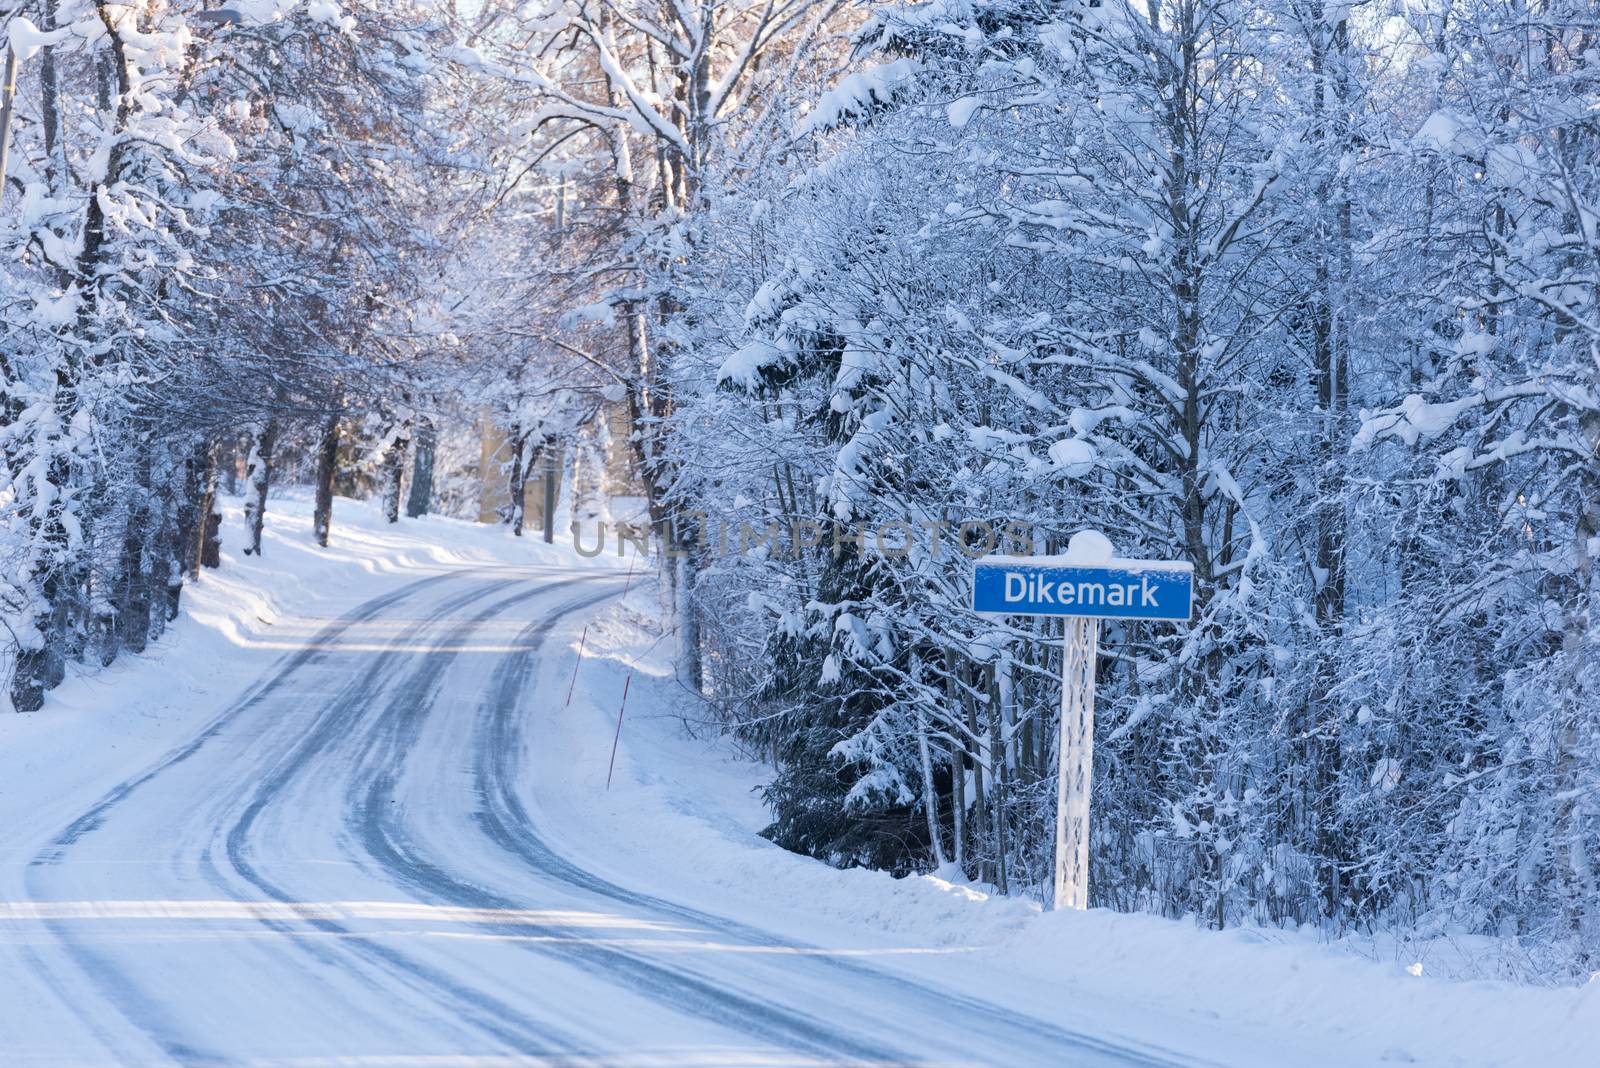 Dikemark road sign on winter road Norway by Nanisimova